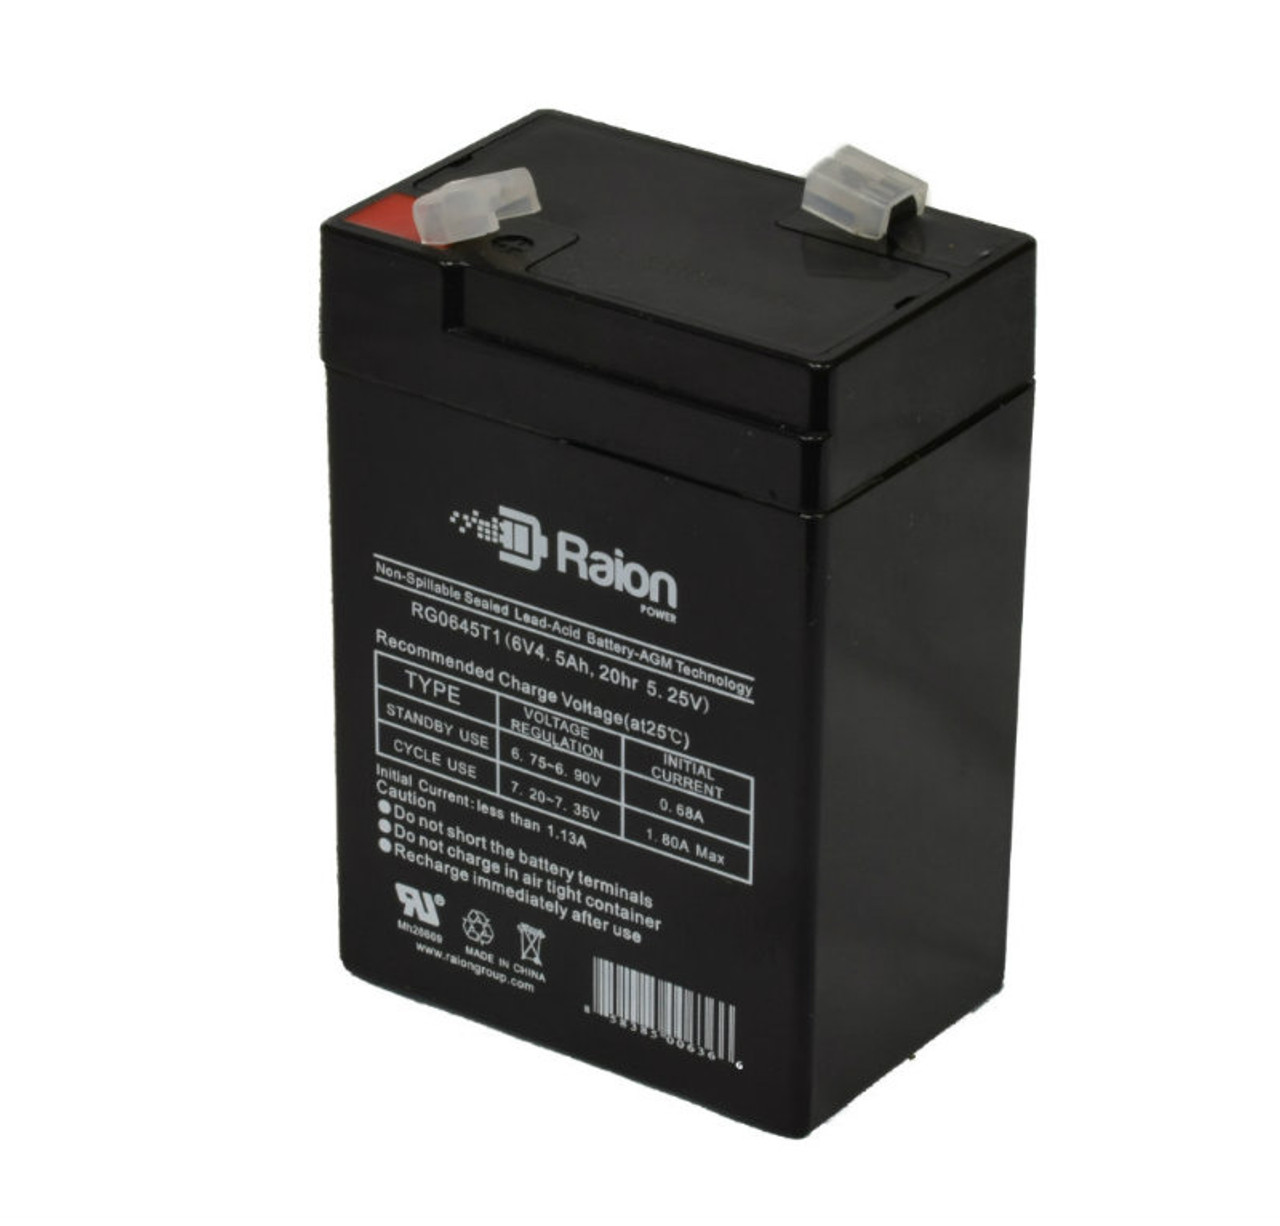 Raion Power RG0645T1 6V 4.5Ah Replacement Battery Cartridge for Sonnenschein A506/4.5K